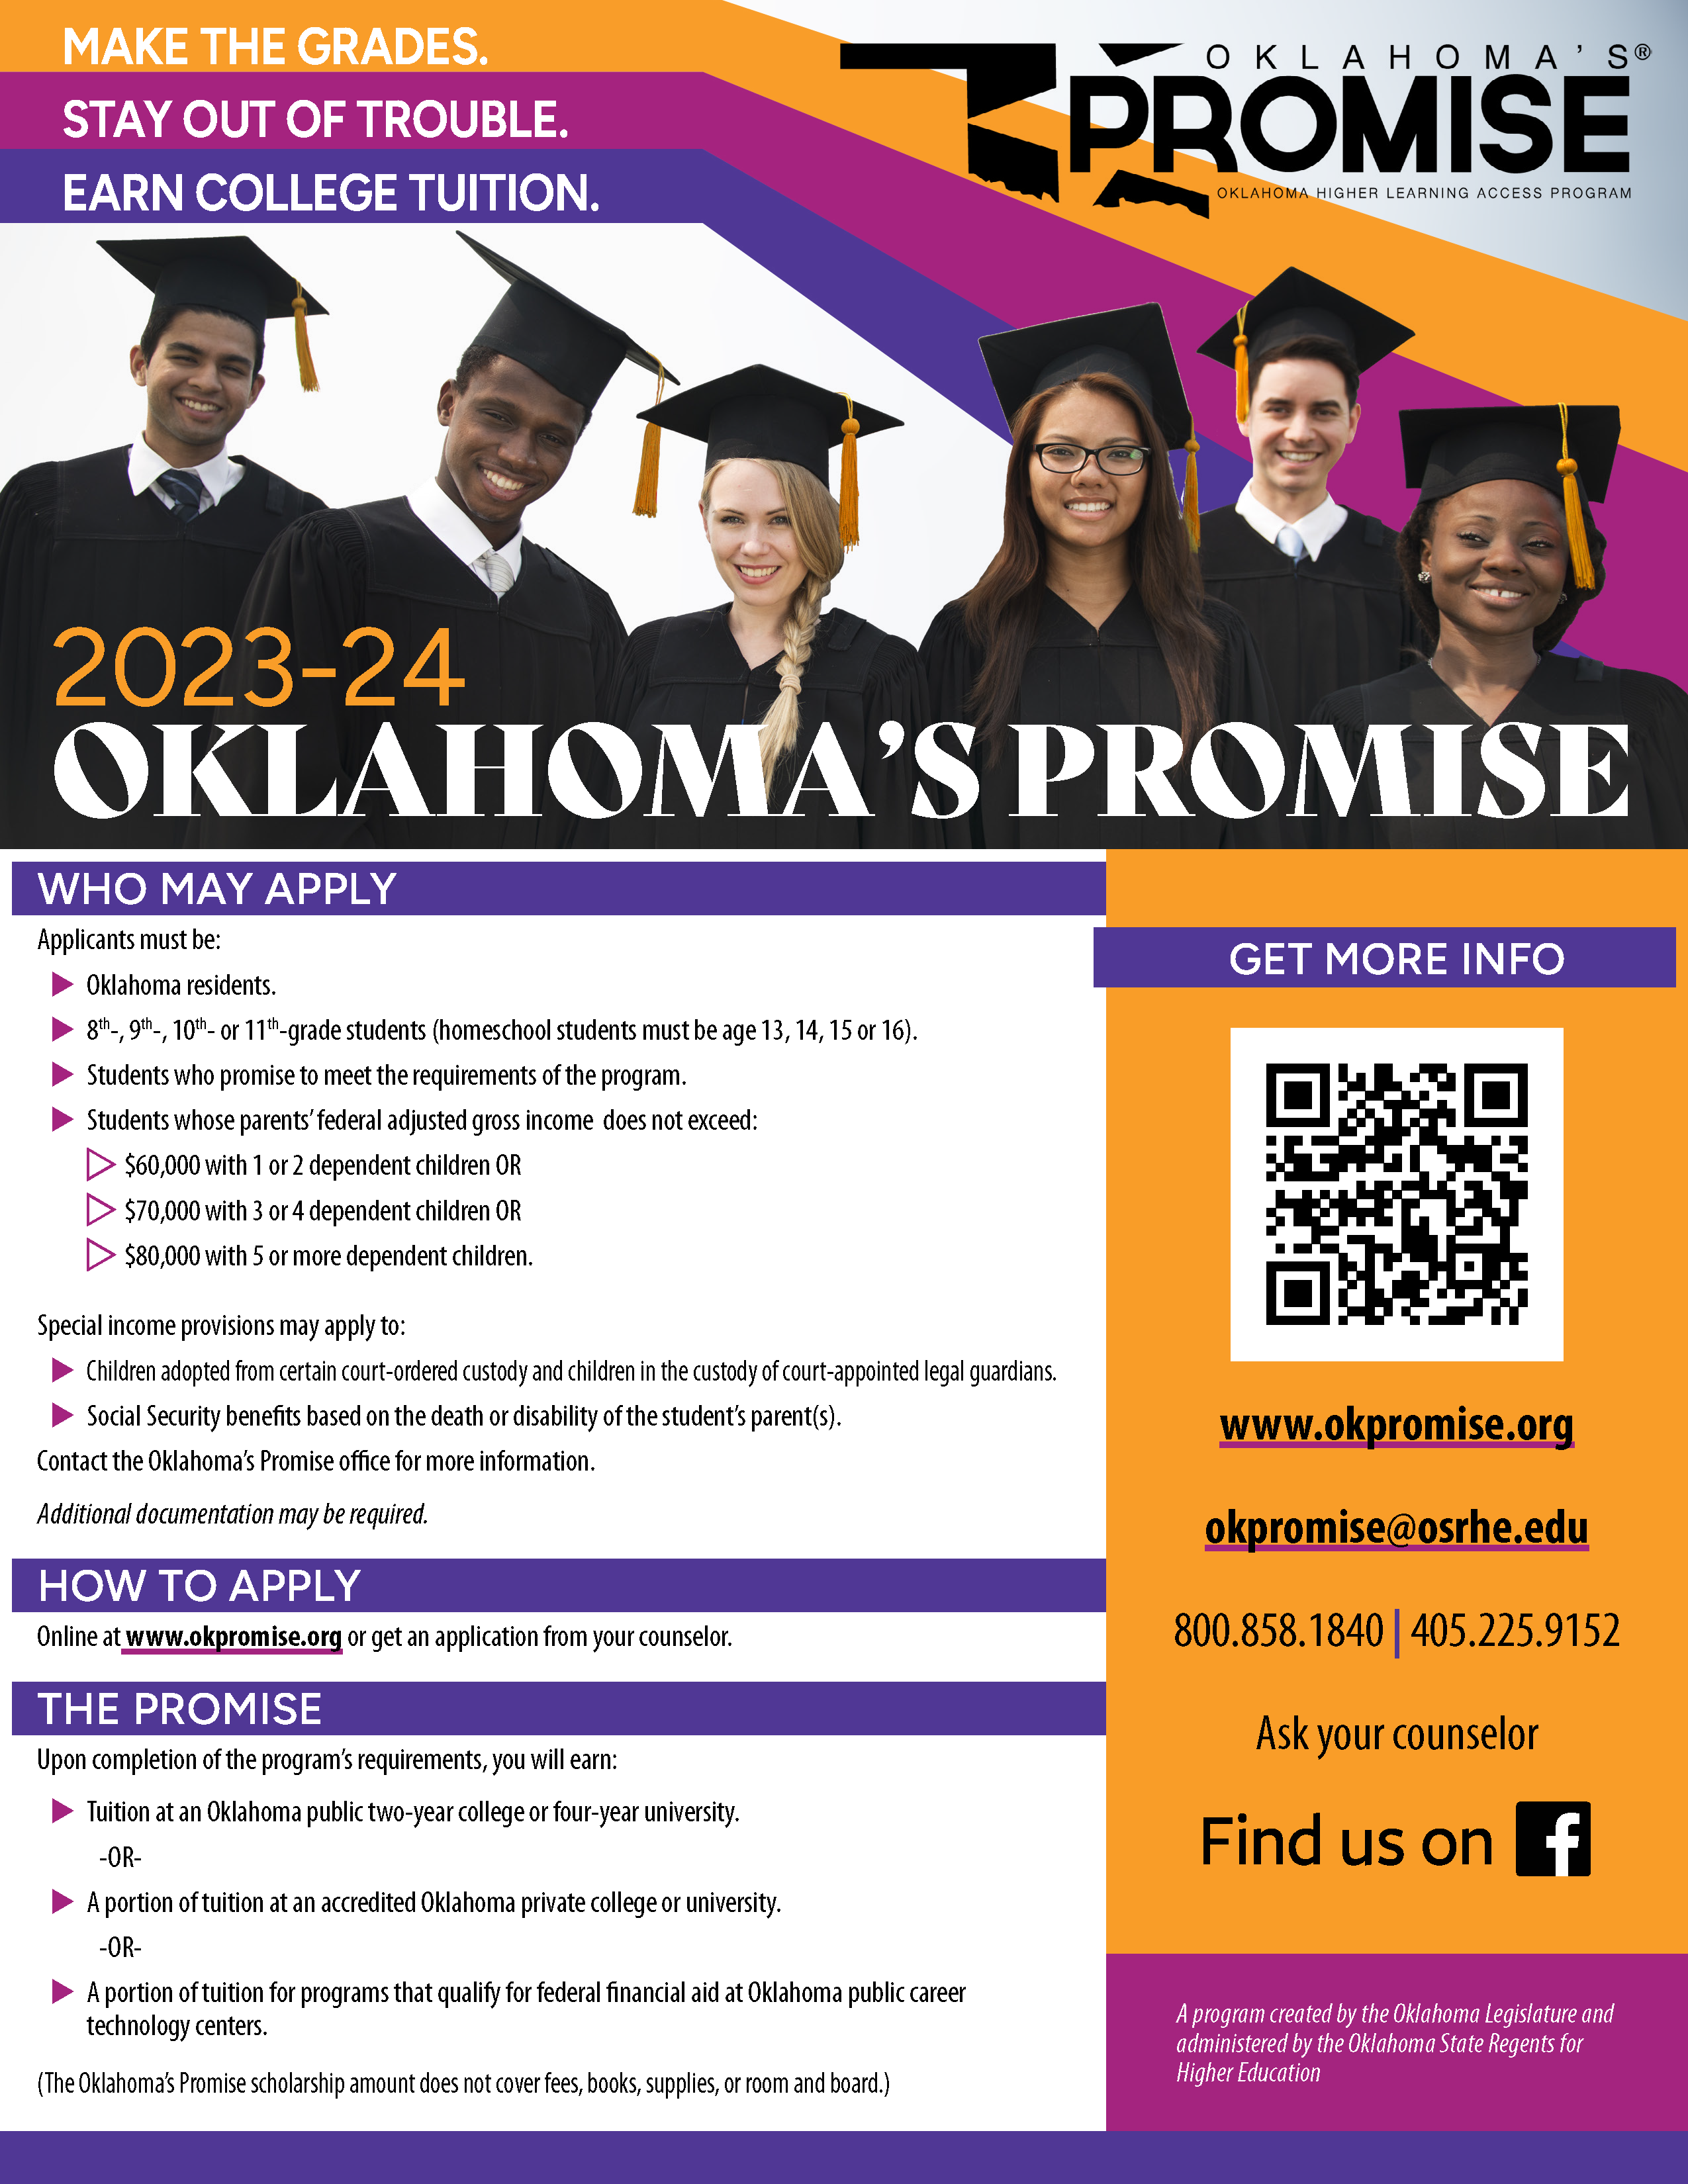 PDF of Oklahoma's Promise Flyer opens at okhighered.org